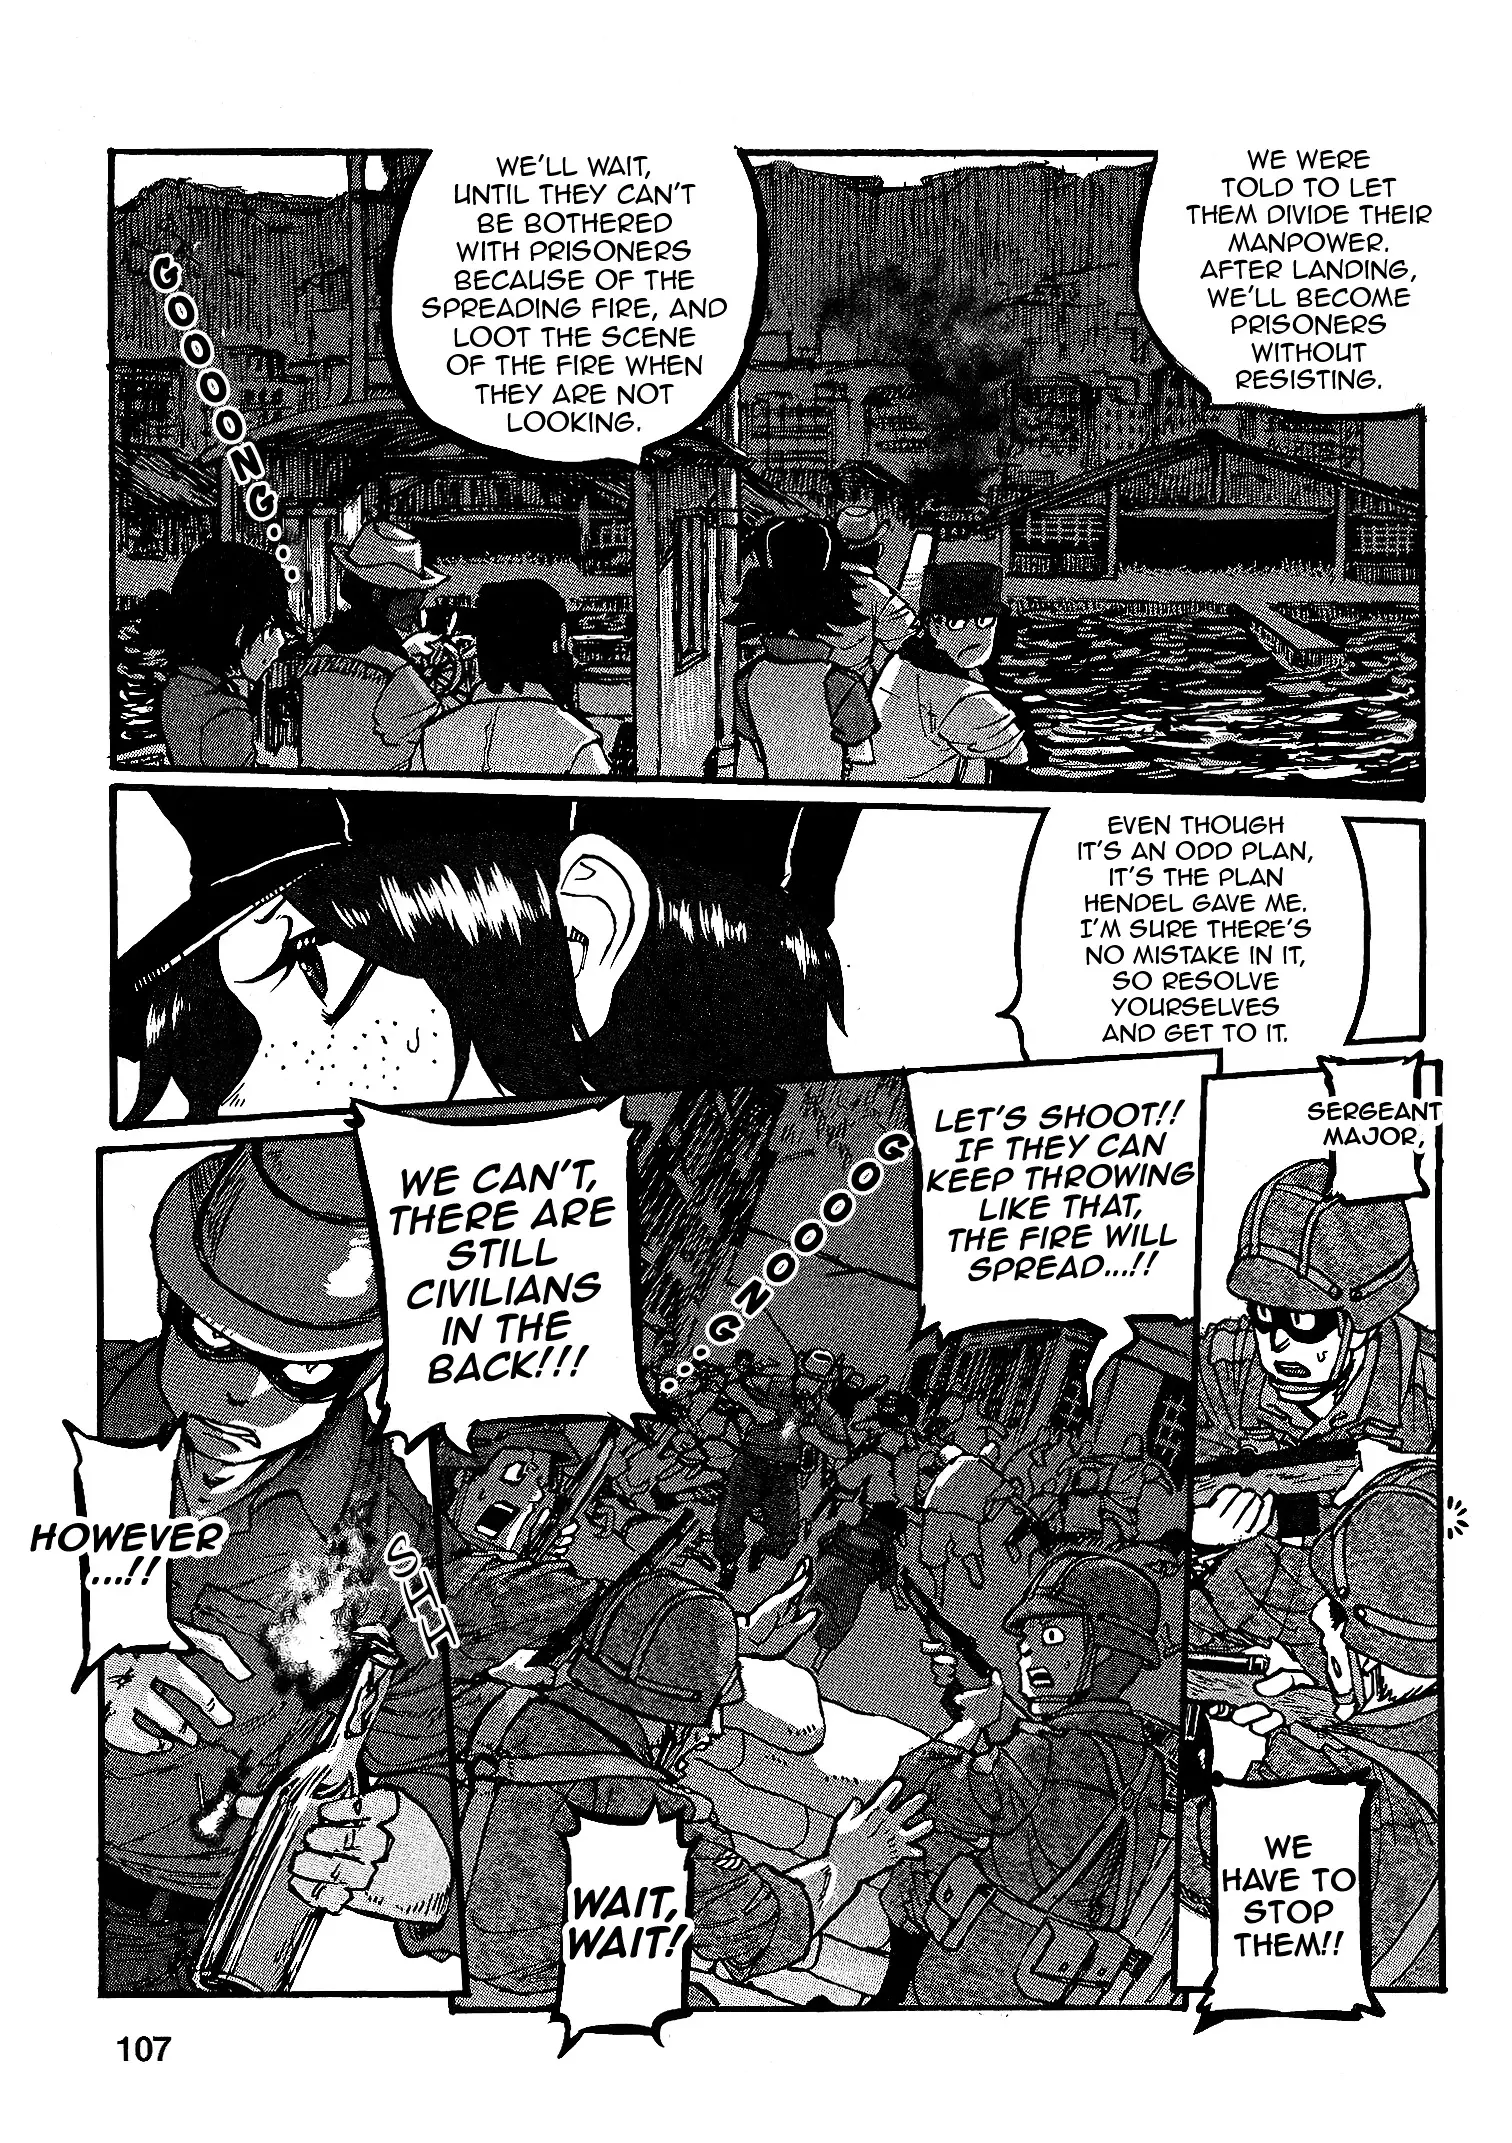 Groundless - Sekigan No Sogekihei - 16 page 36-114ecbb5